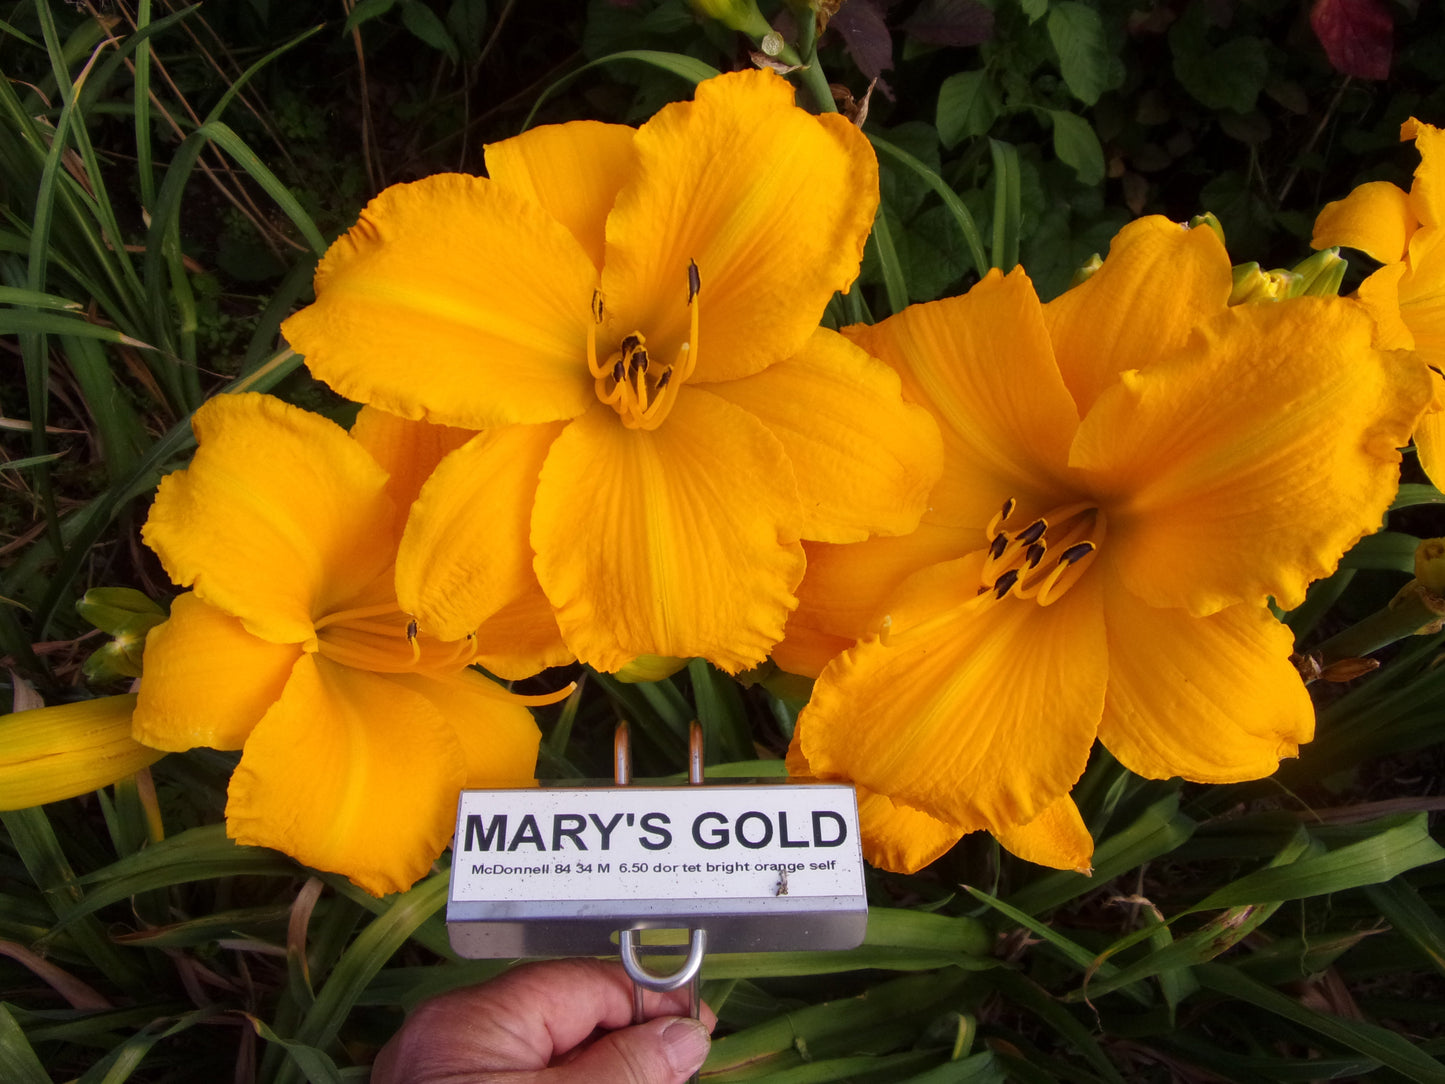 MARY'S GOLD